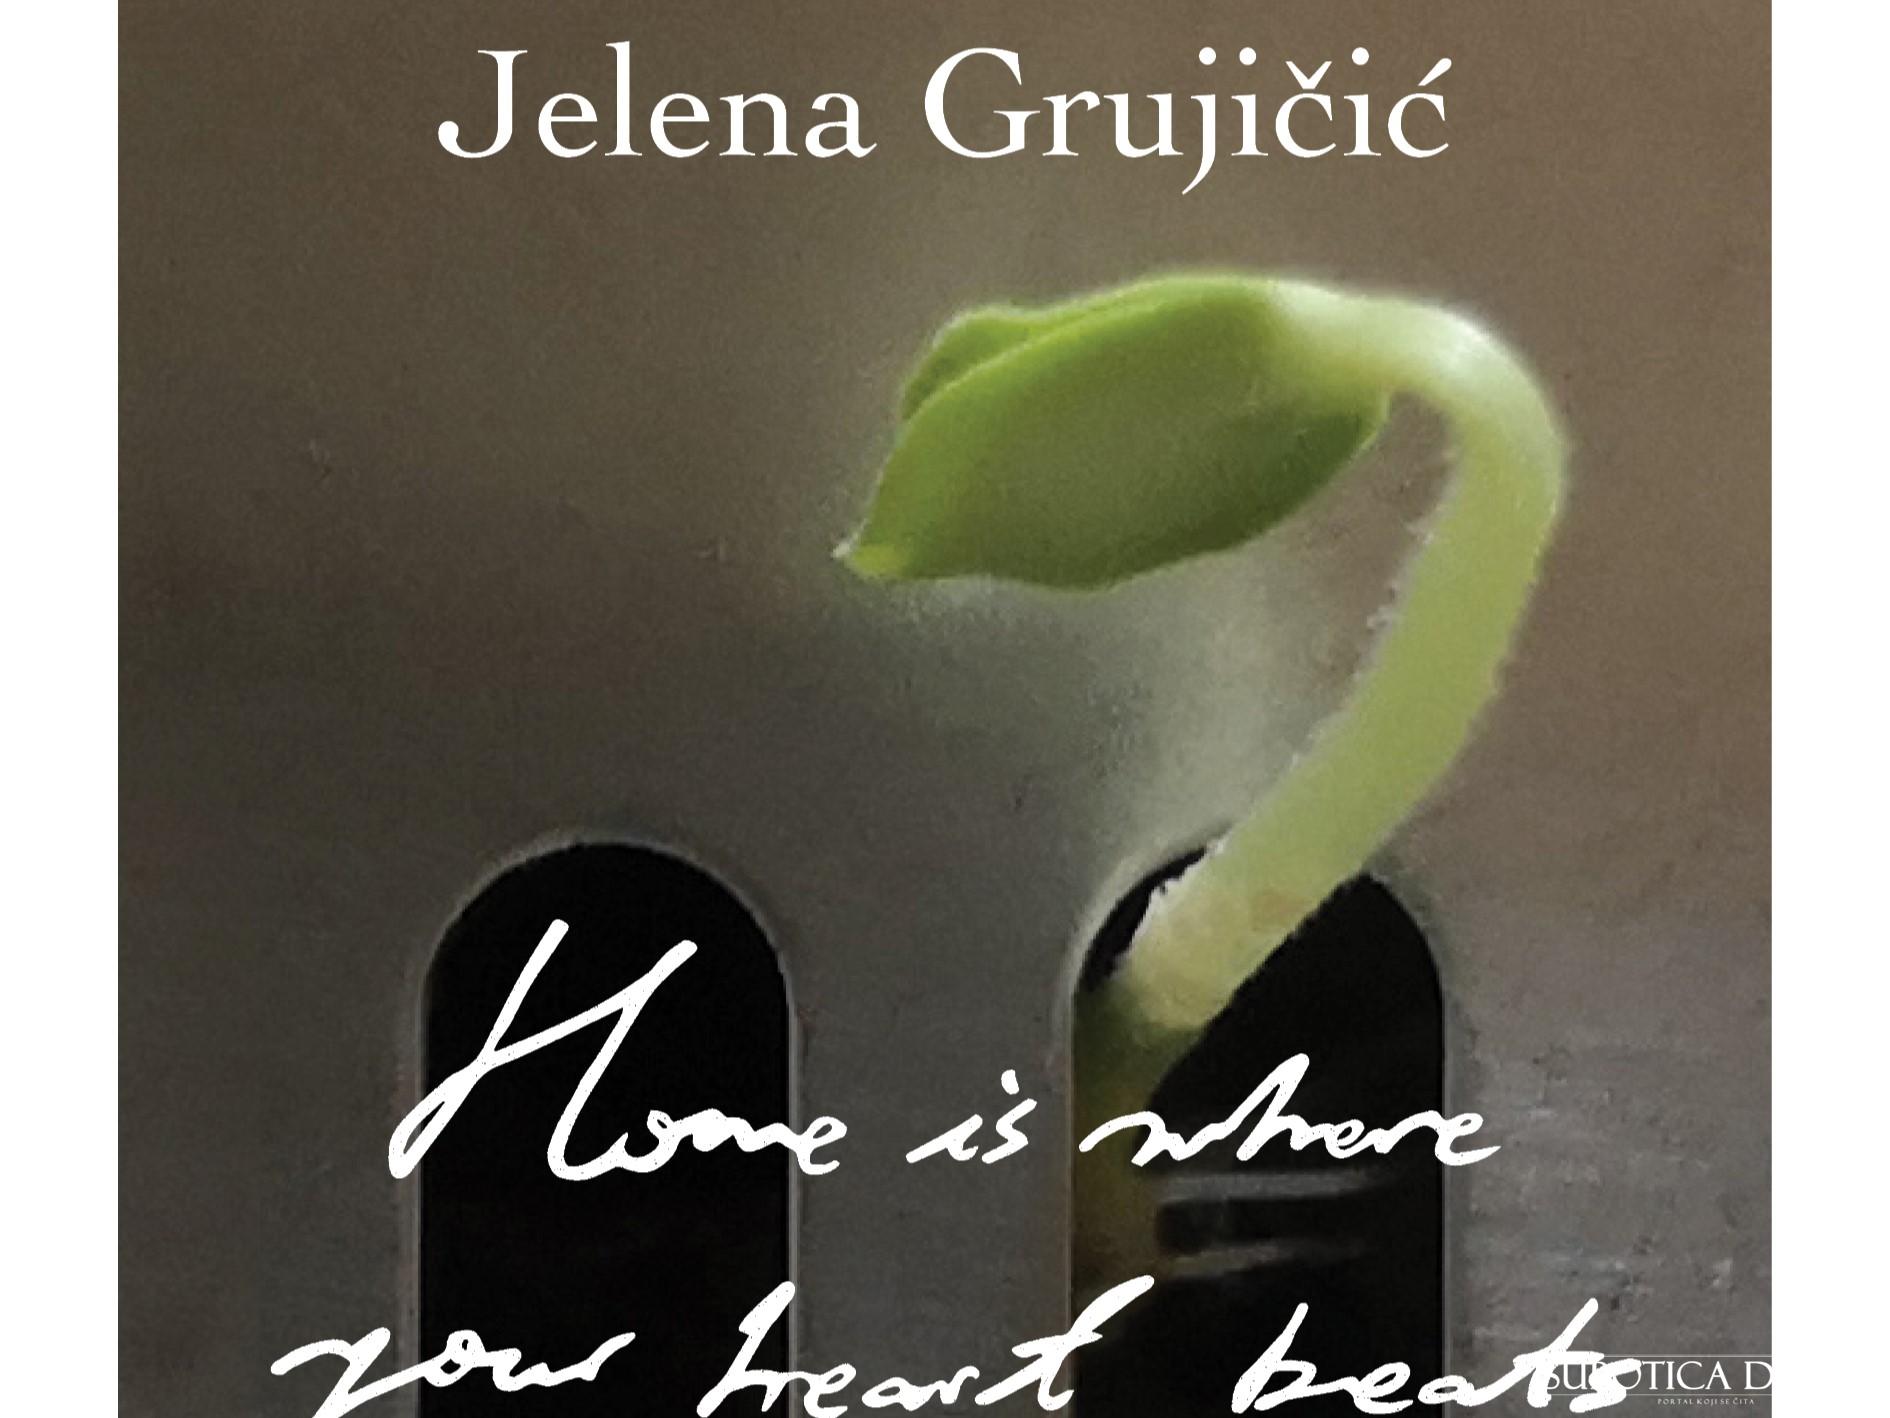 Otvaranje izložbe “Home is were your heart beats” Jelene Grujičić